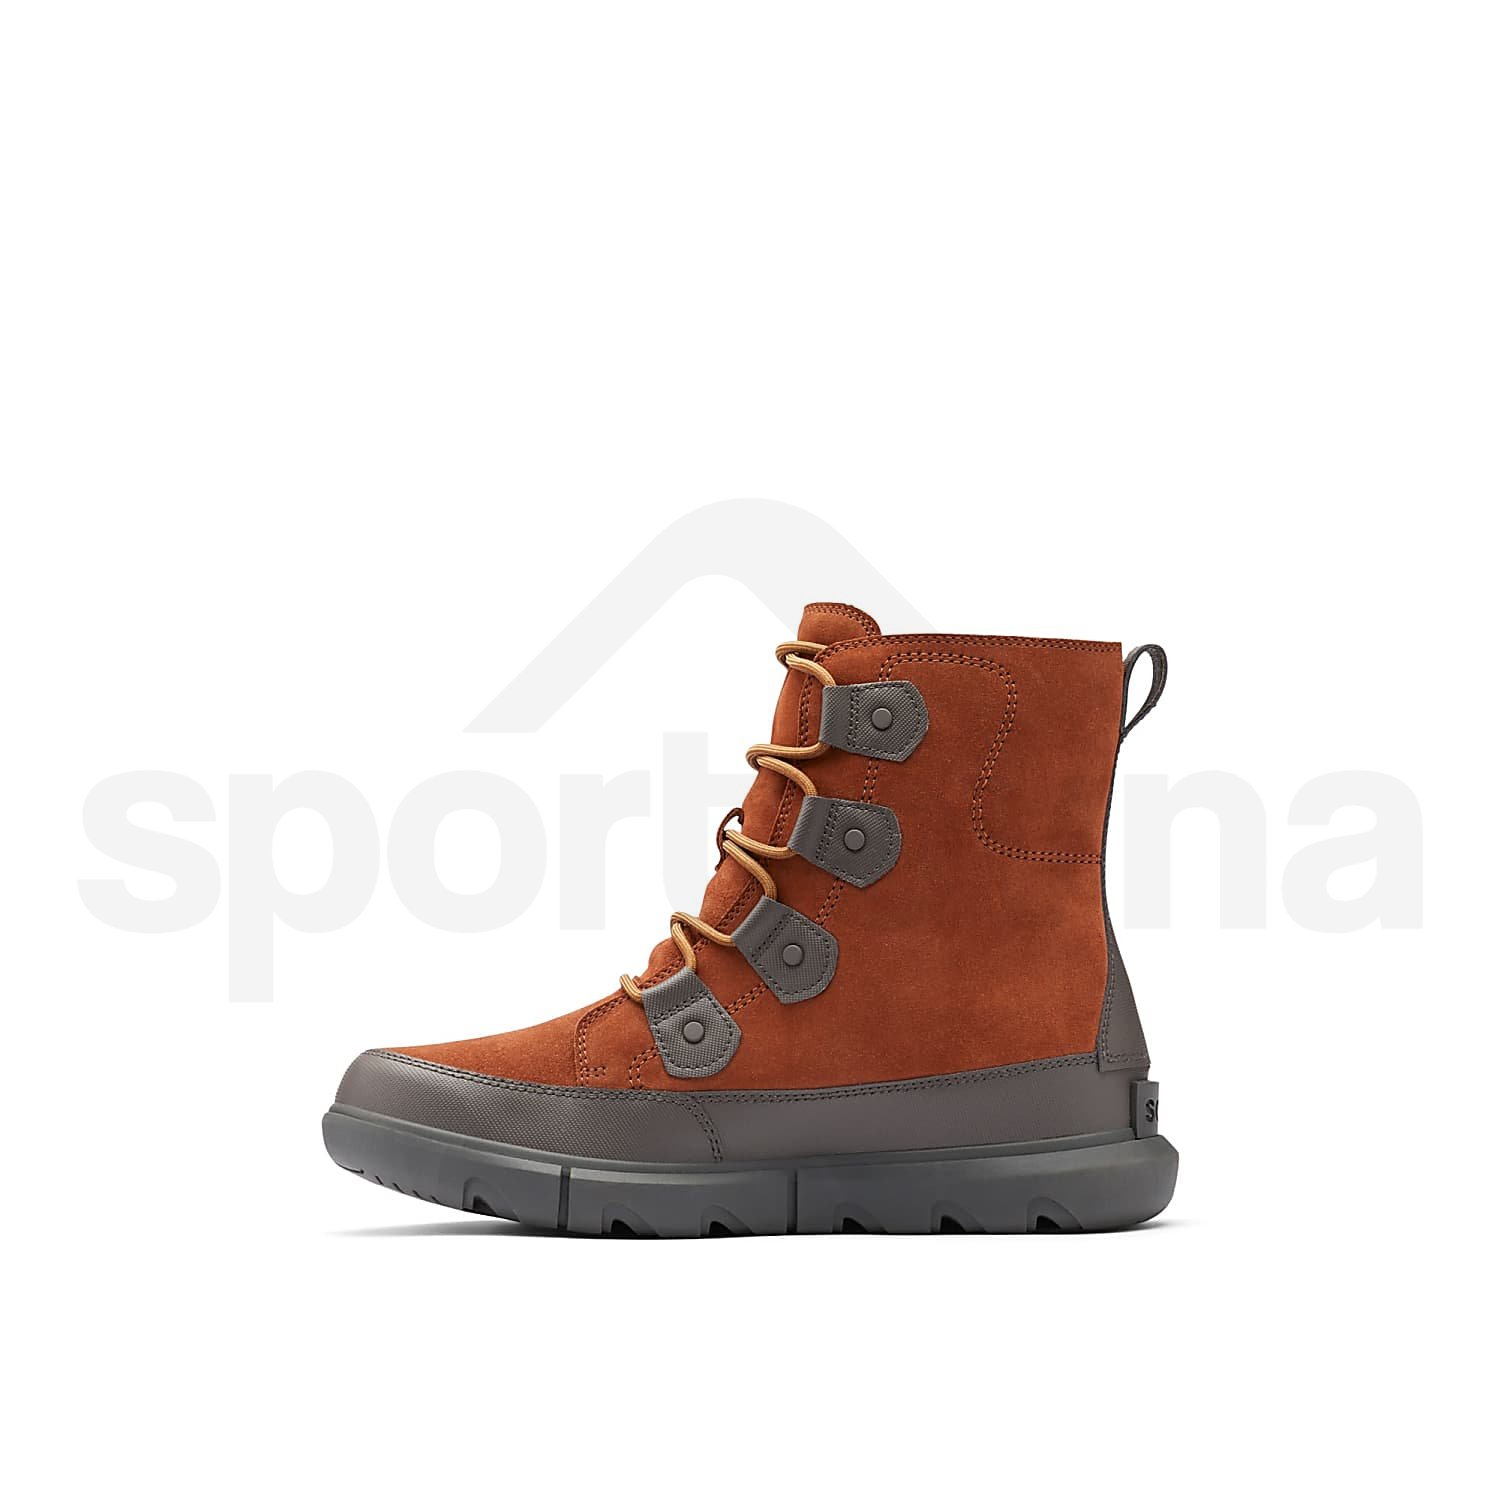 Obuv Sorel Explorer™ Boot WP Man - oranžová/šedá